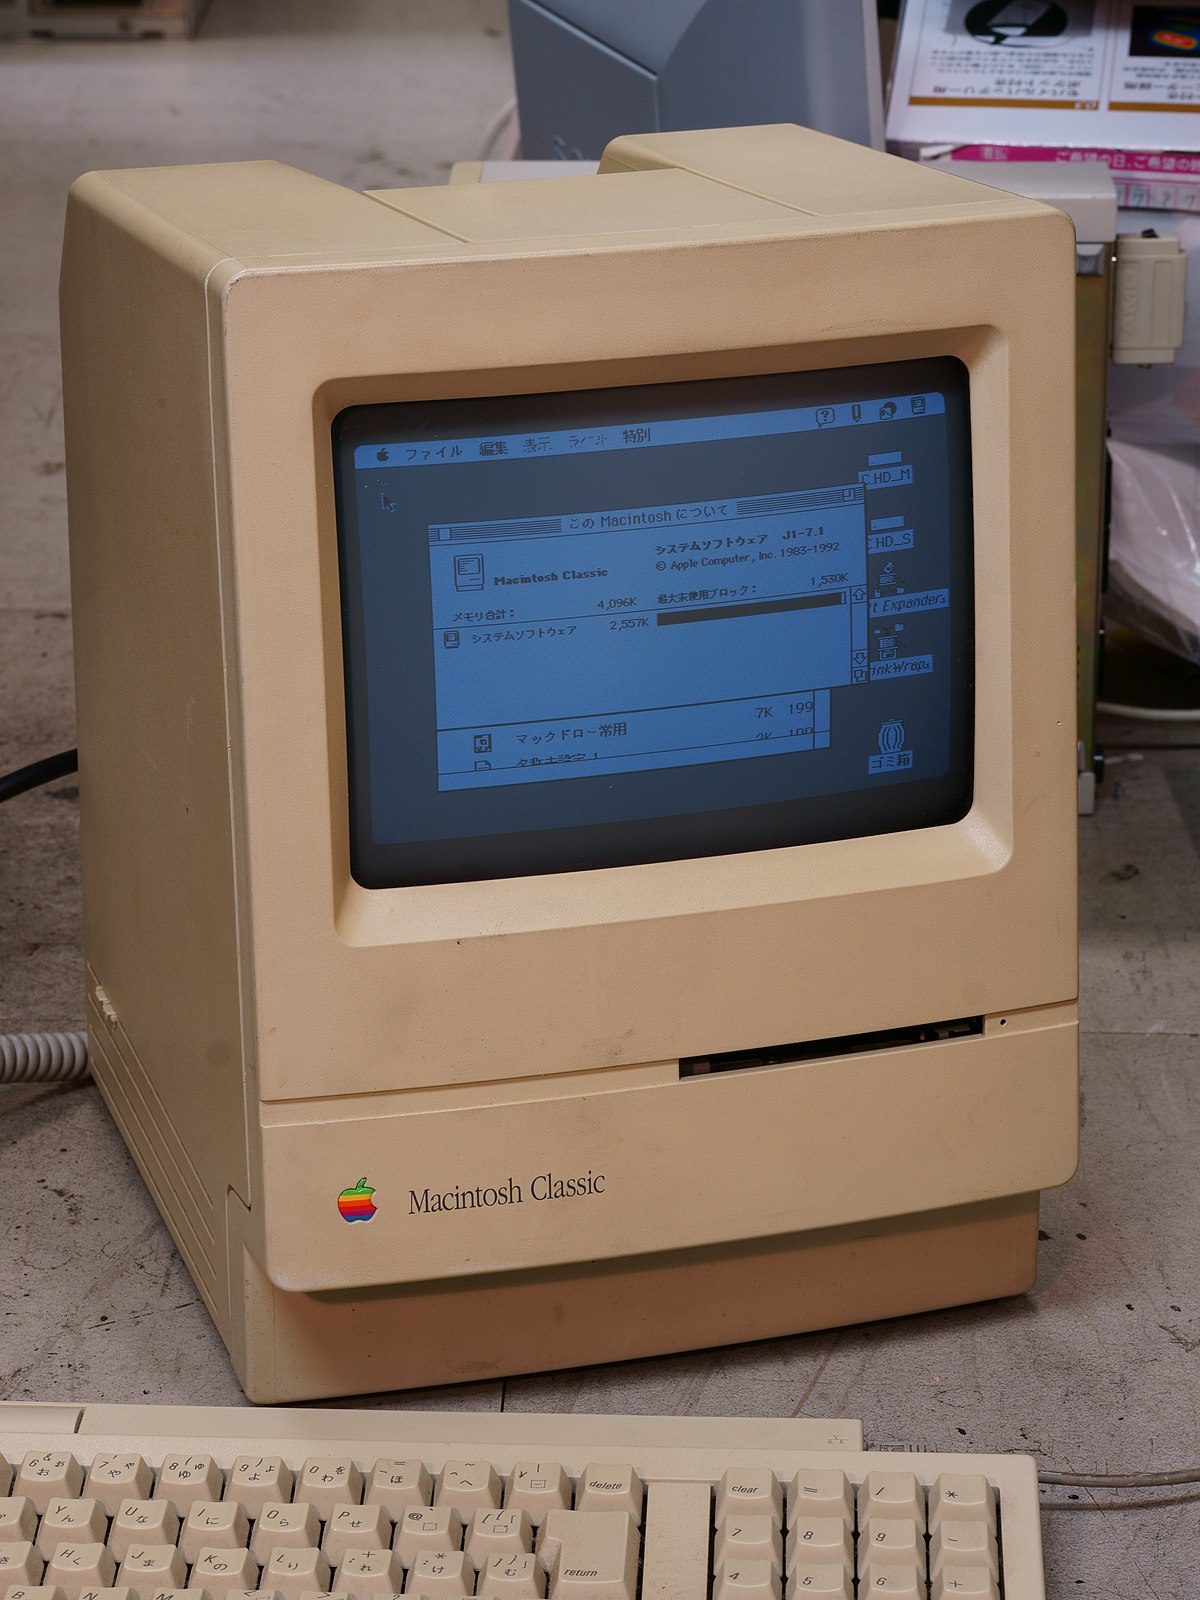 Macintosh Classic - Wikipedia